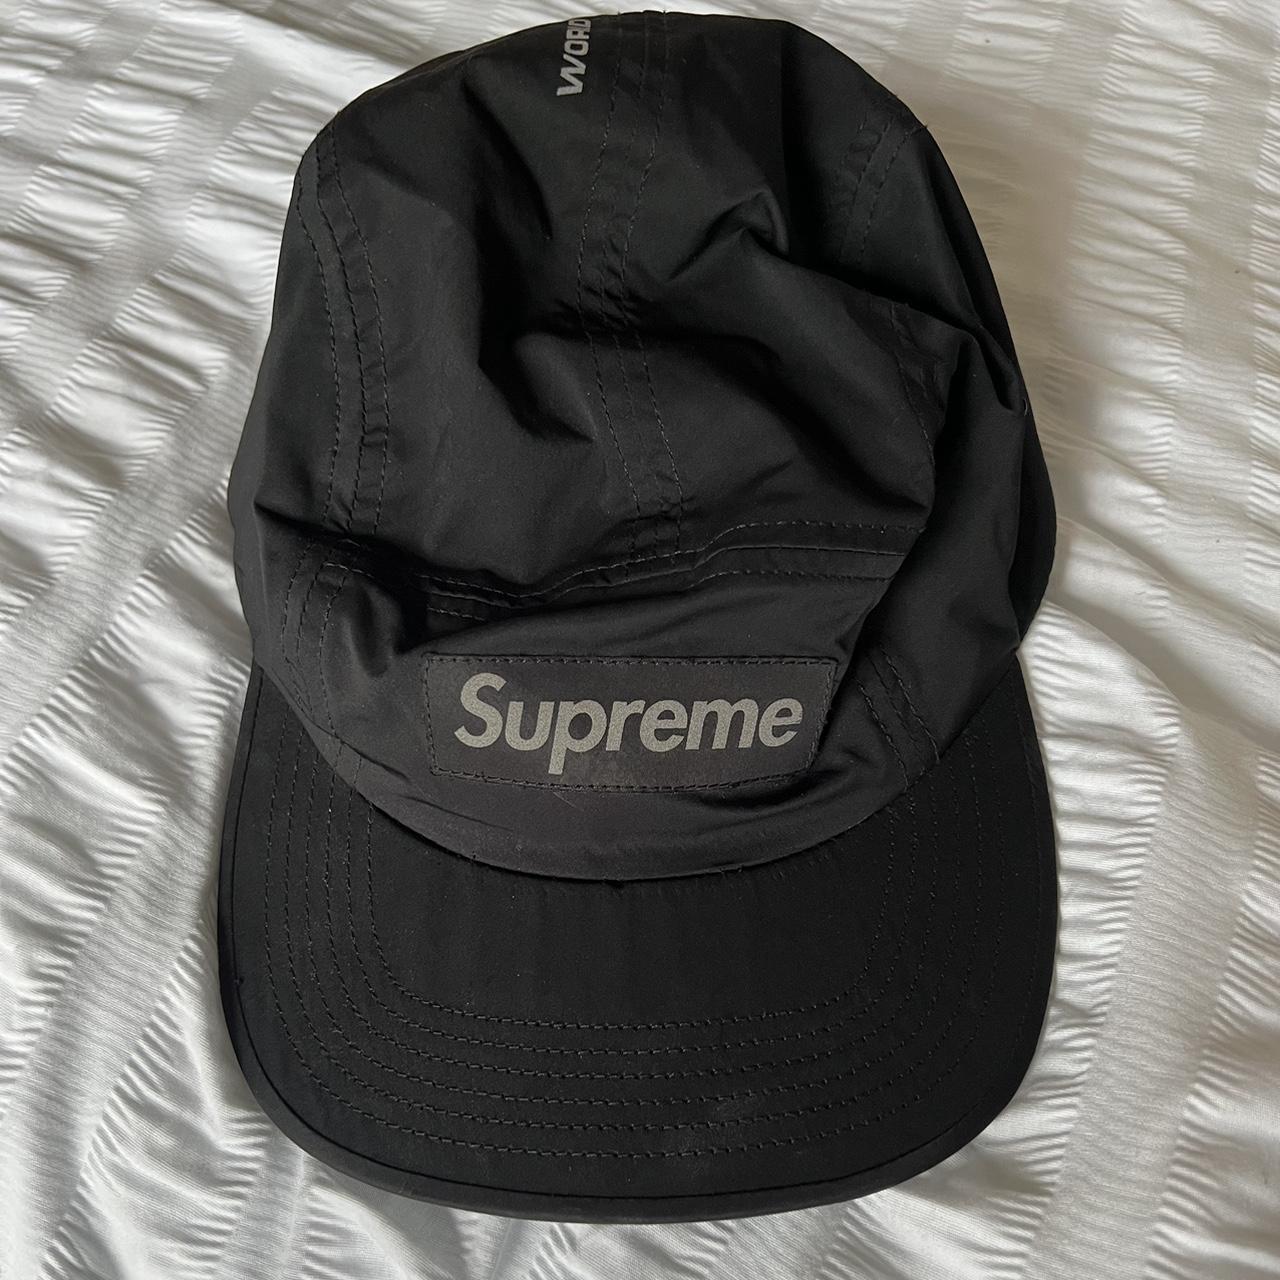 Supreme black cap - Depop